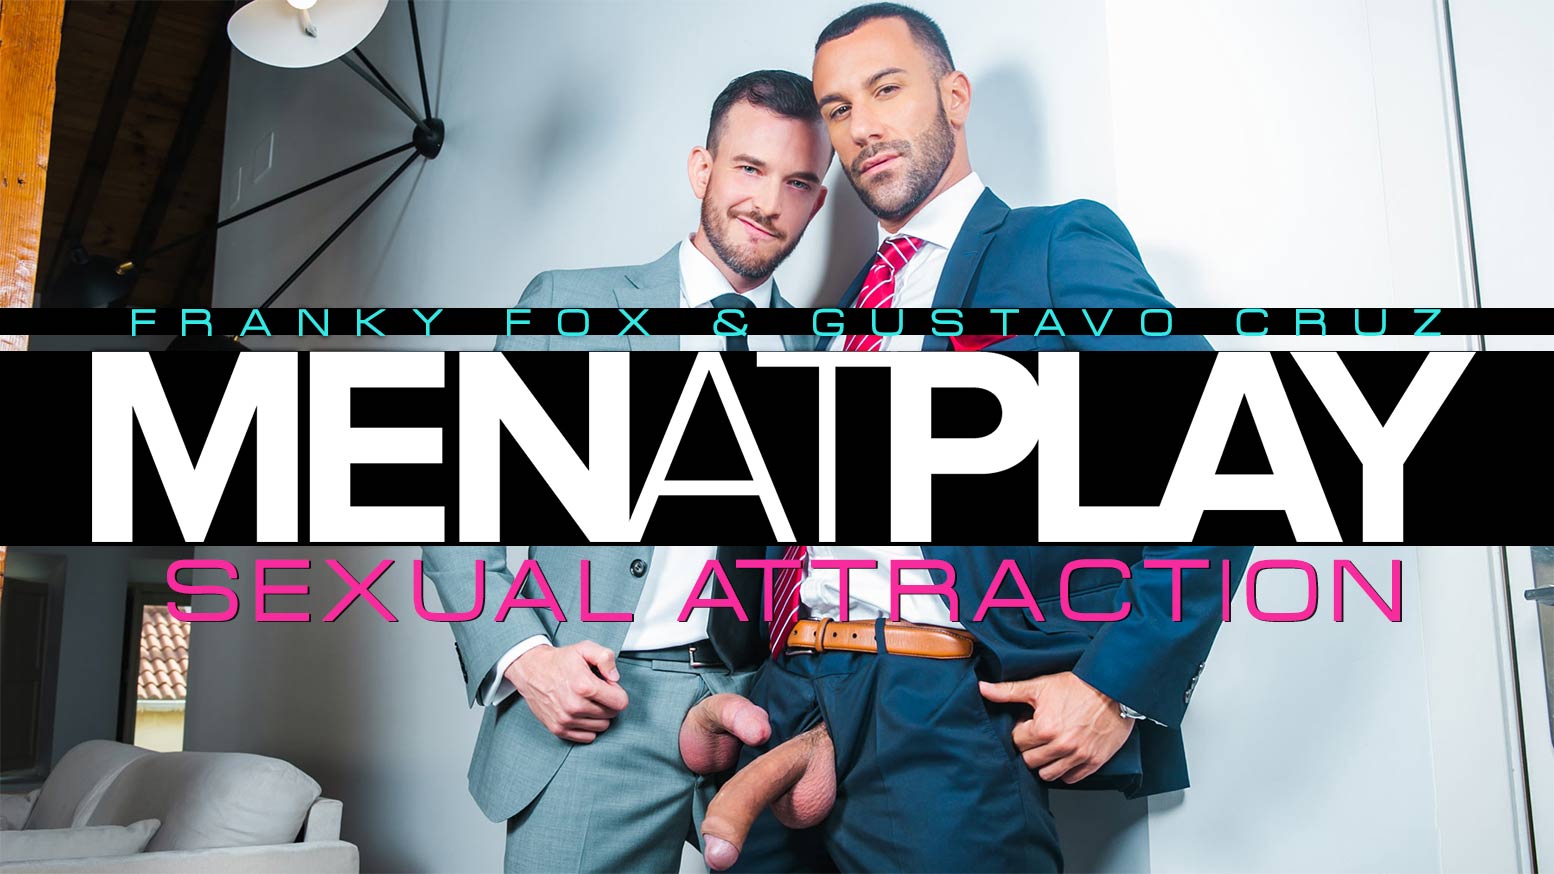 MENatPLAY Franky Fox + Newcomer Gustavo Cruz in Sexual Attraction image